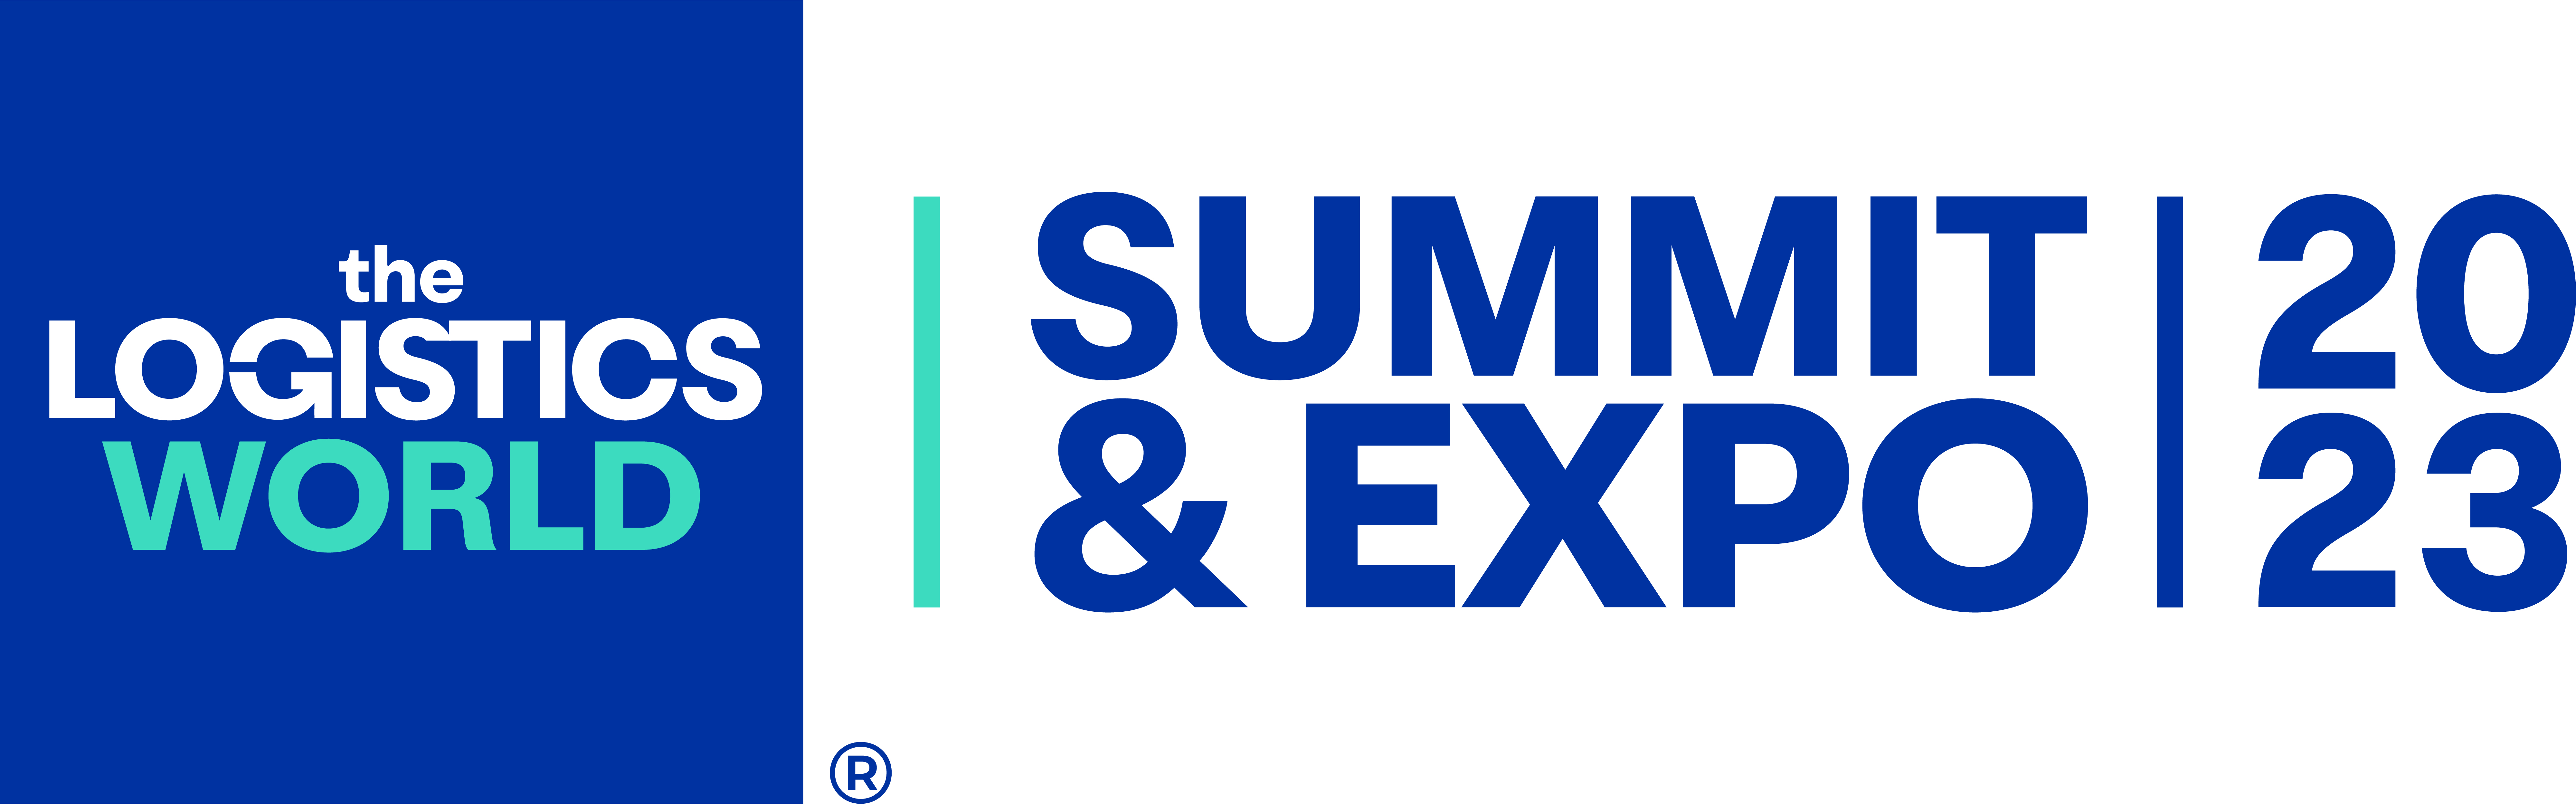 Logo THE LOGISTICS WORLD® | SUMMIT & EXPO